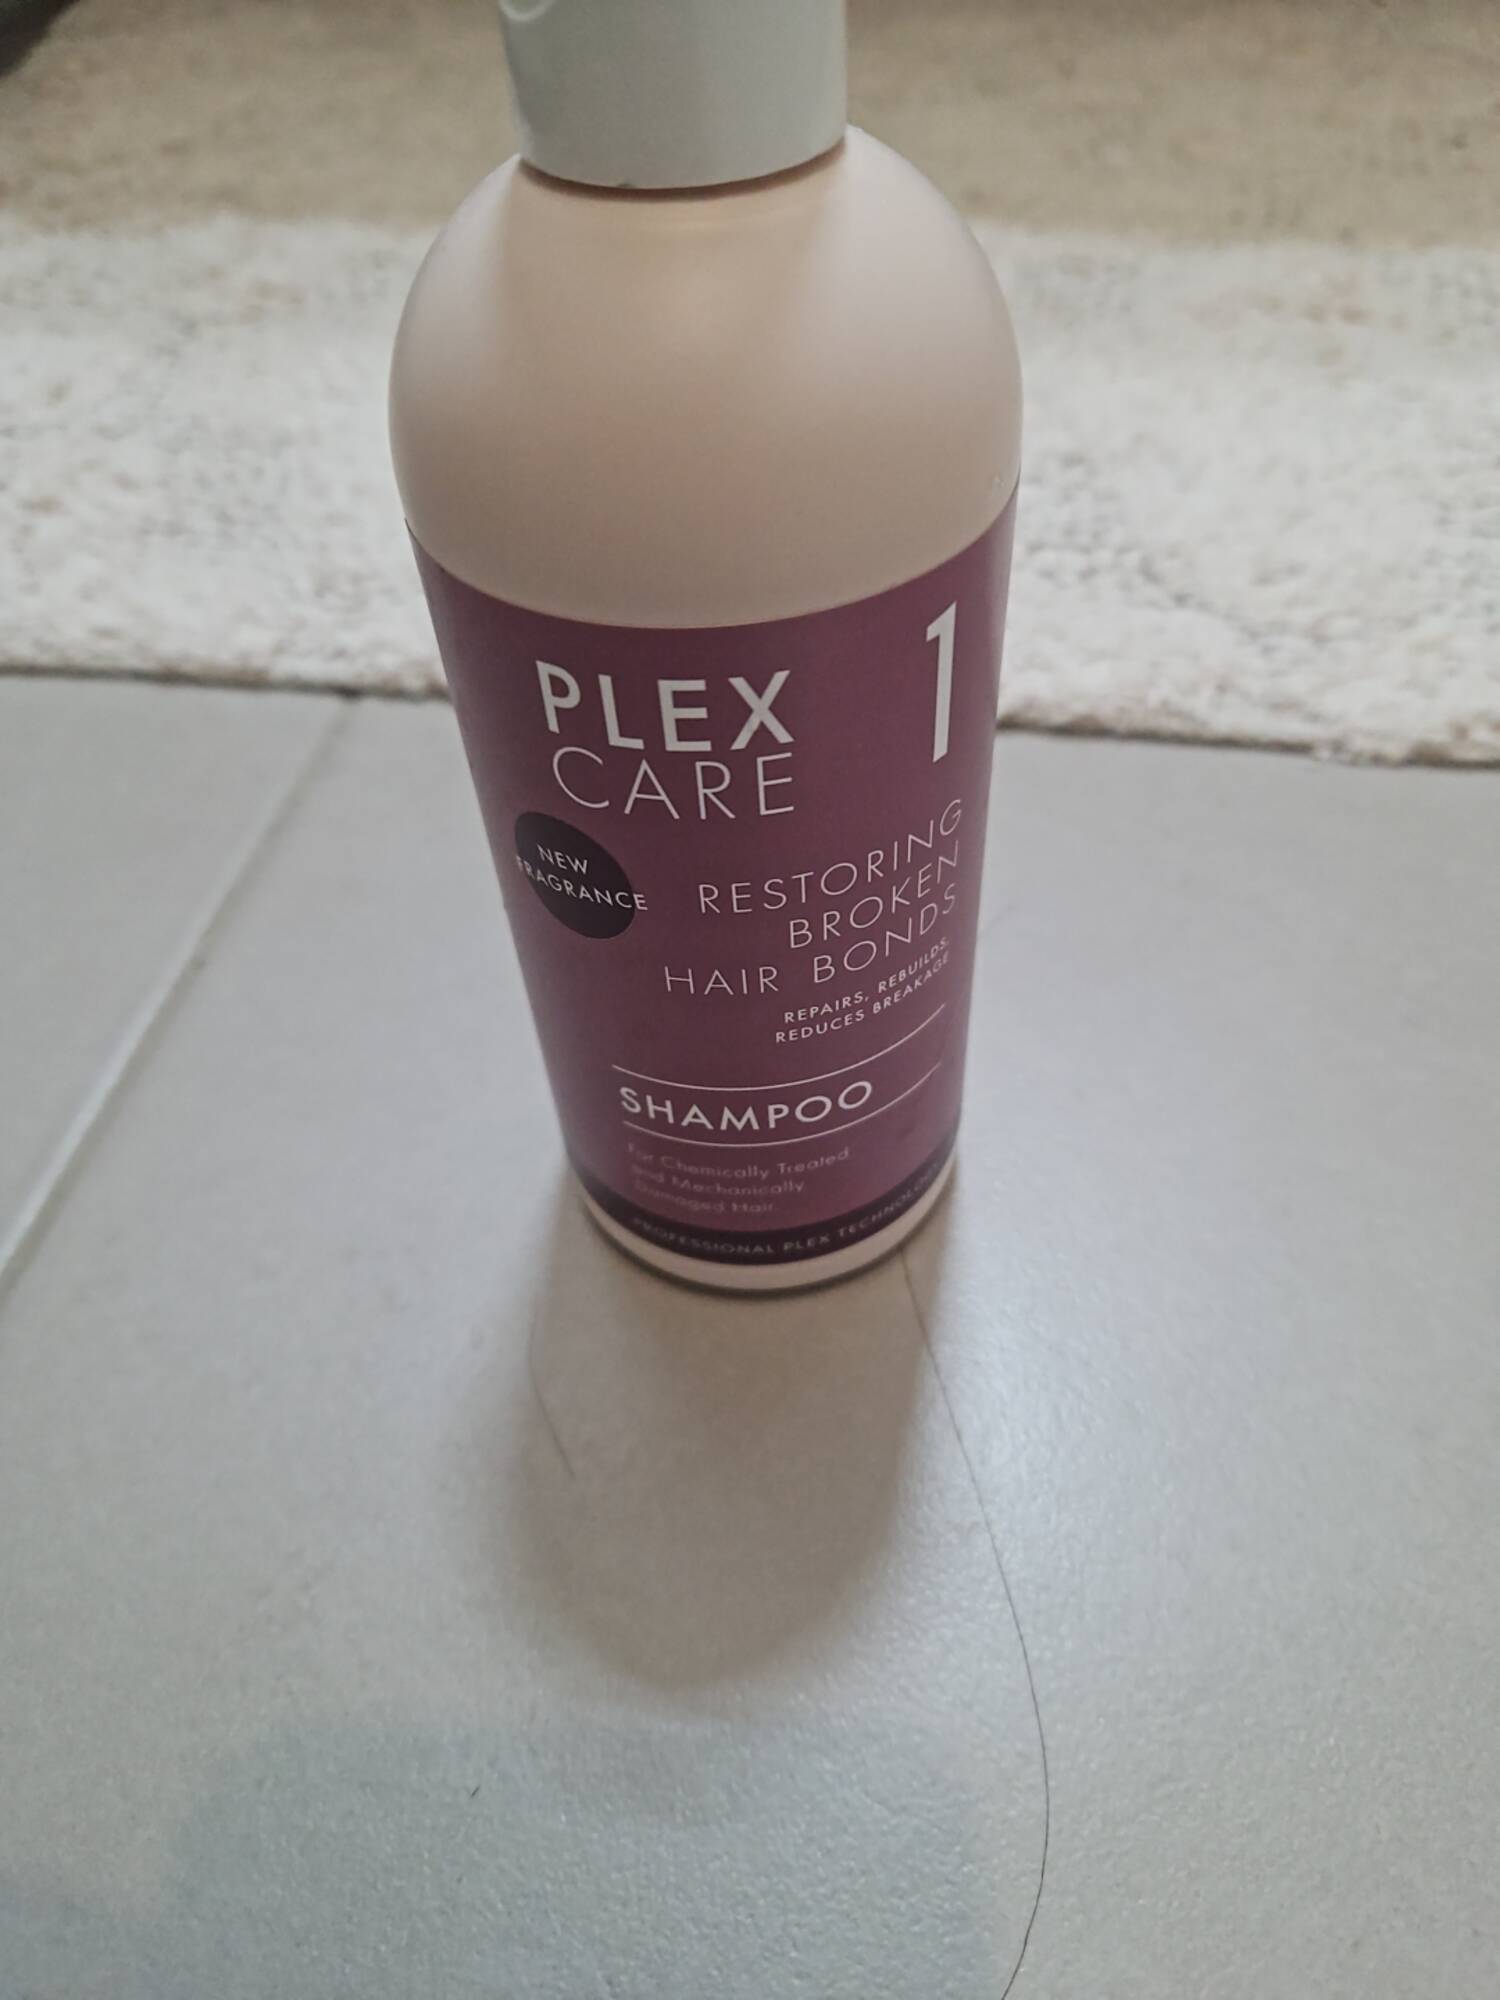 ACTION - Plex care 1 - Restoring broken hair bonds shampoo